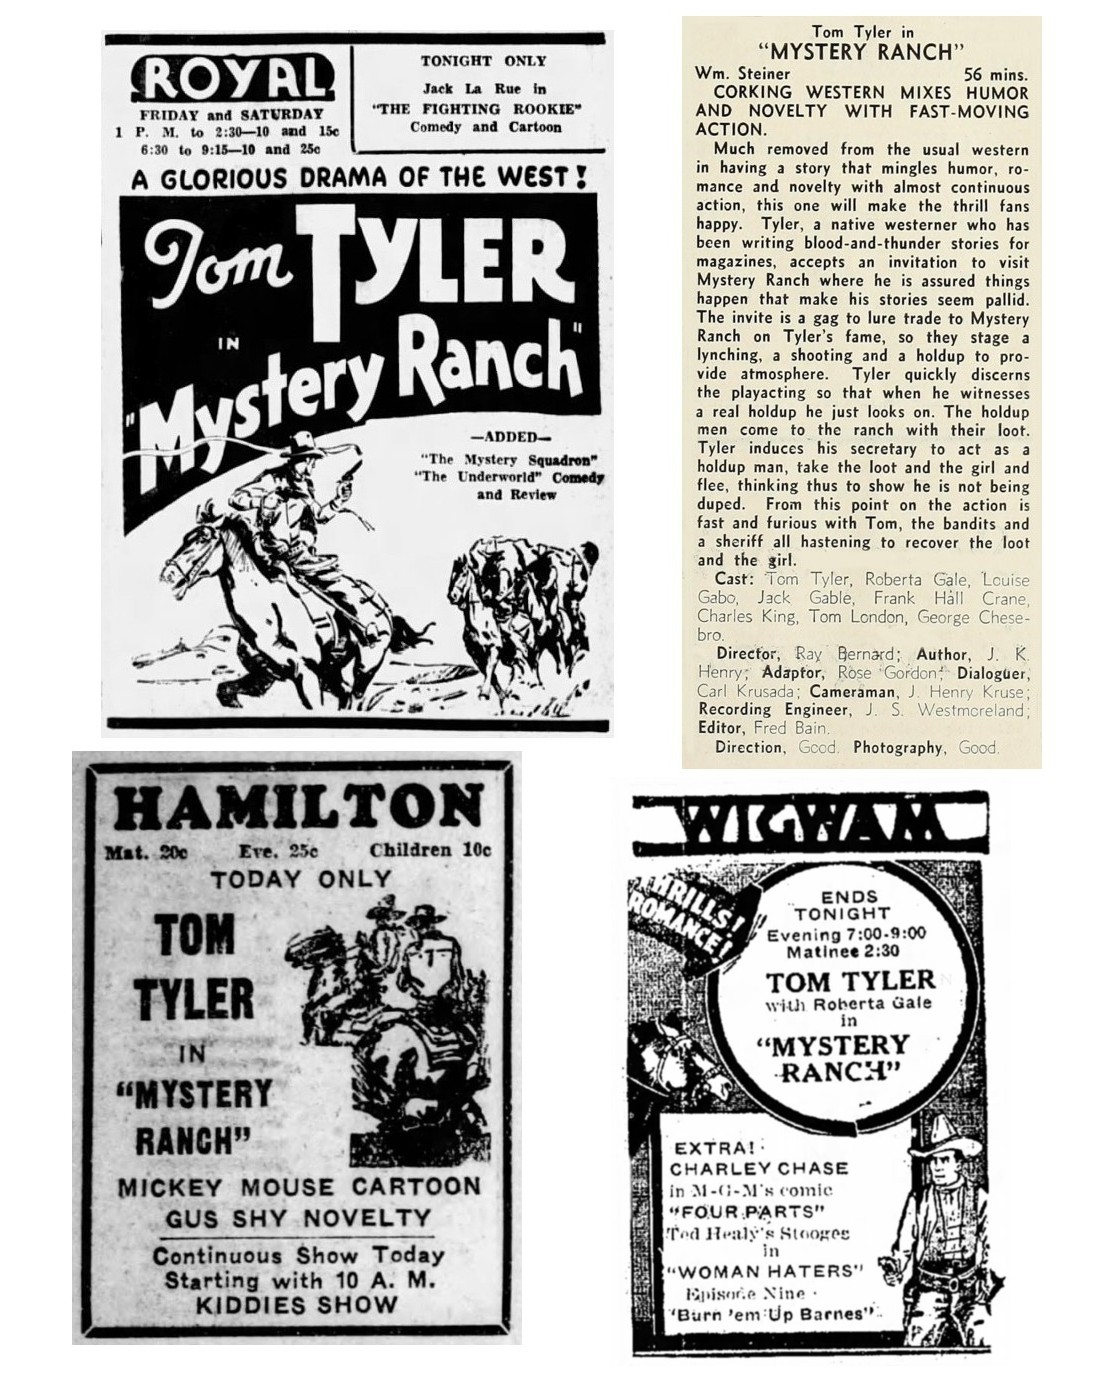 Mystery Ranch cinema ads film reviews